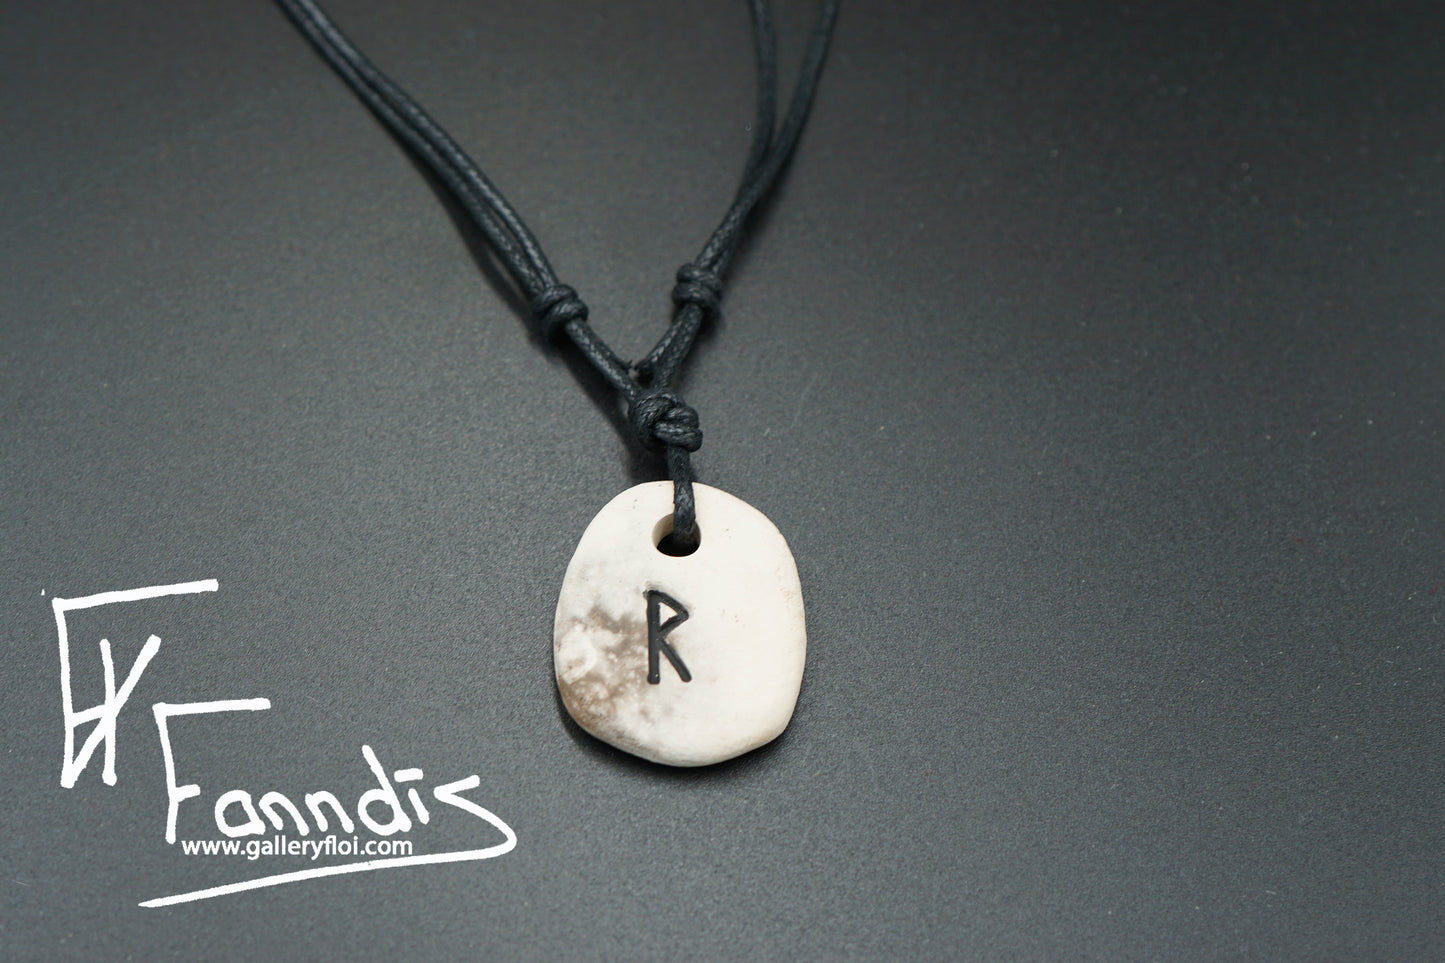 Víkinga rúna hálsmen / Viking rune necklace